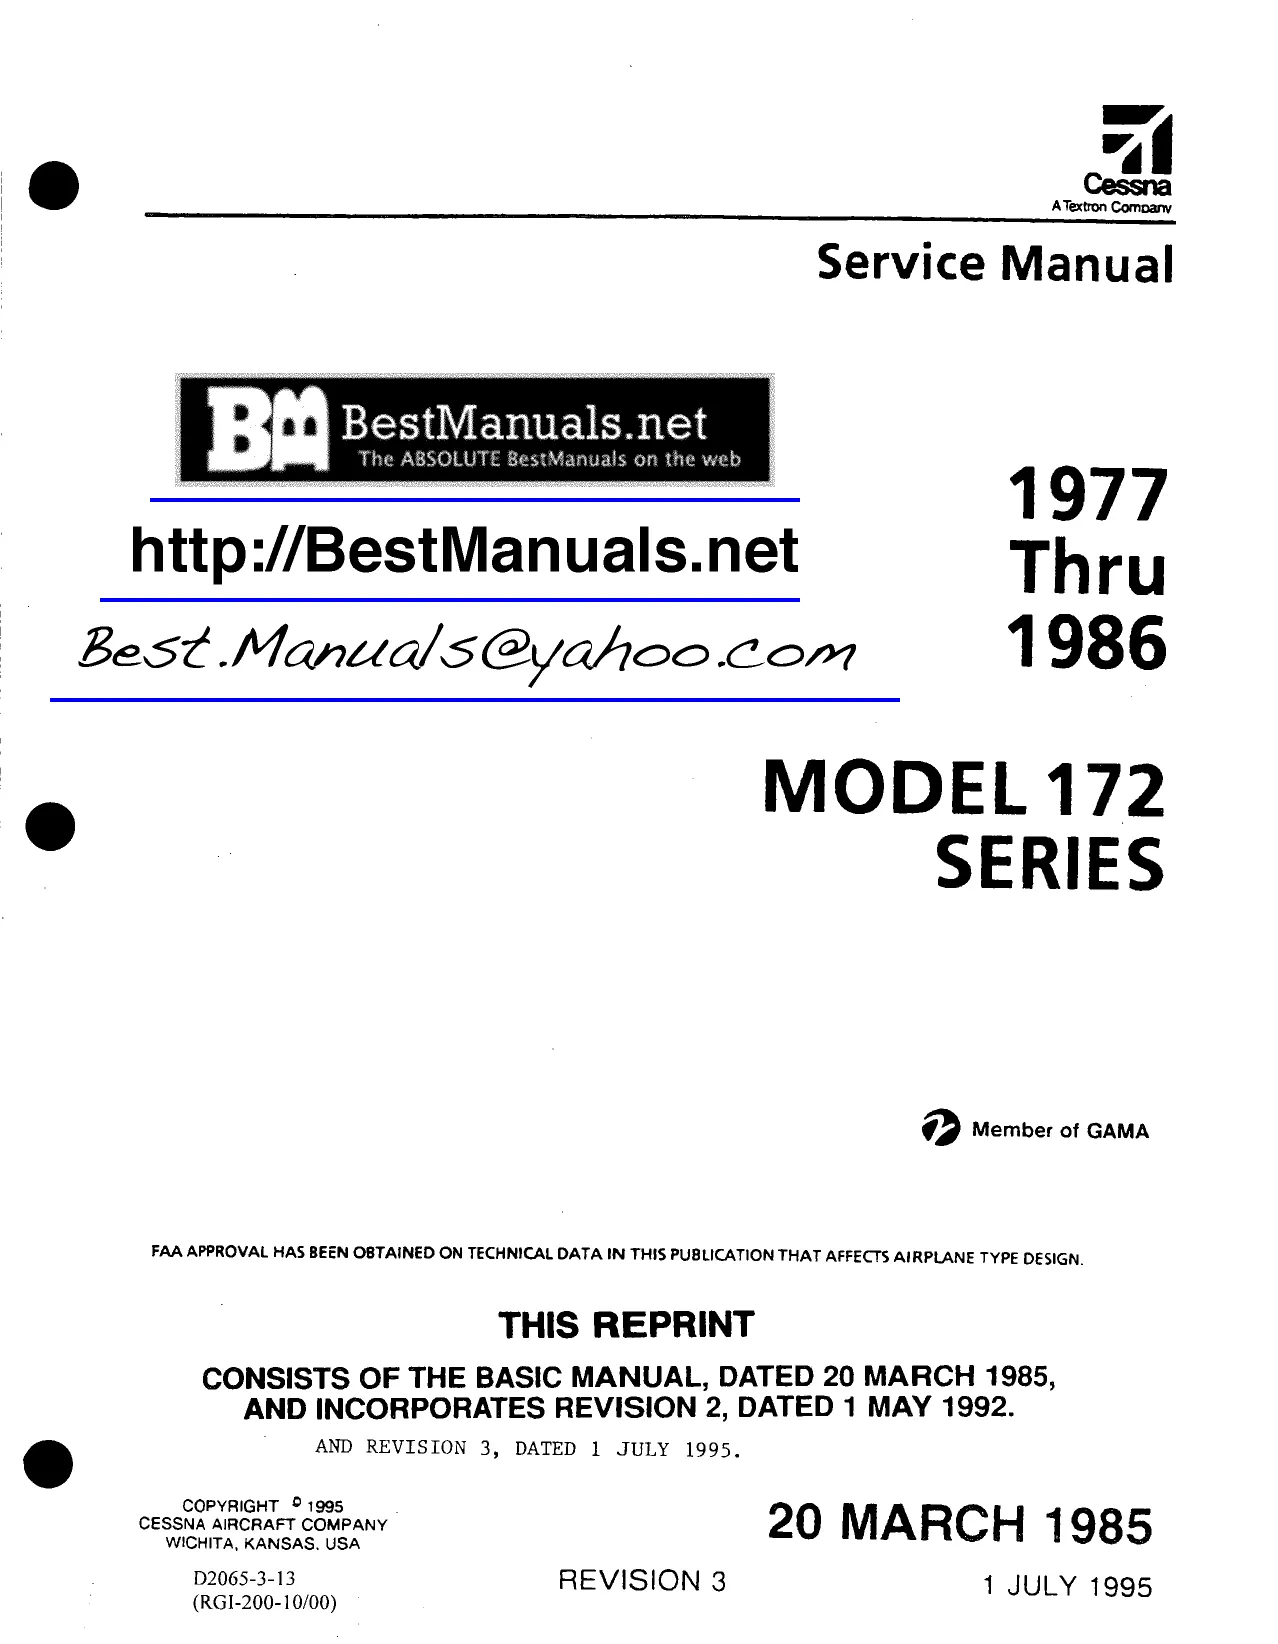 1977-1986 Cessna 172 N Skyhawk aircraft service manual, parts list Preview image 1